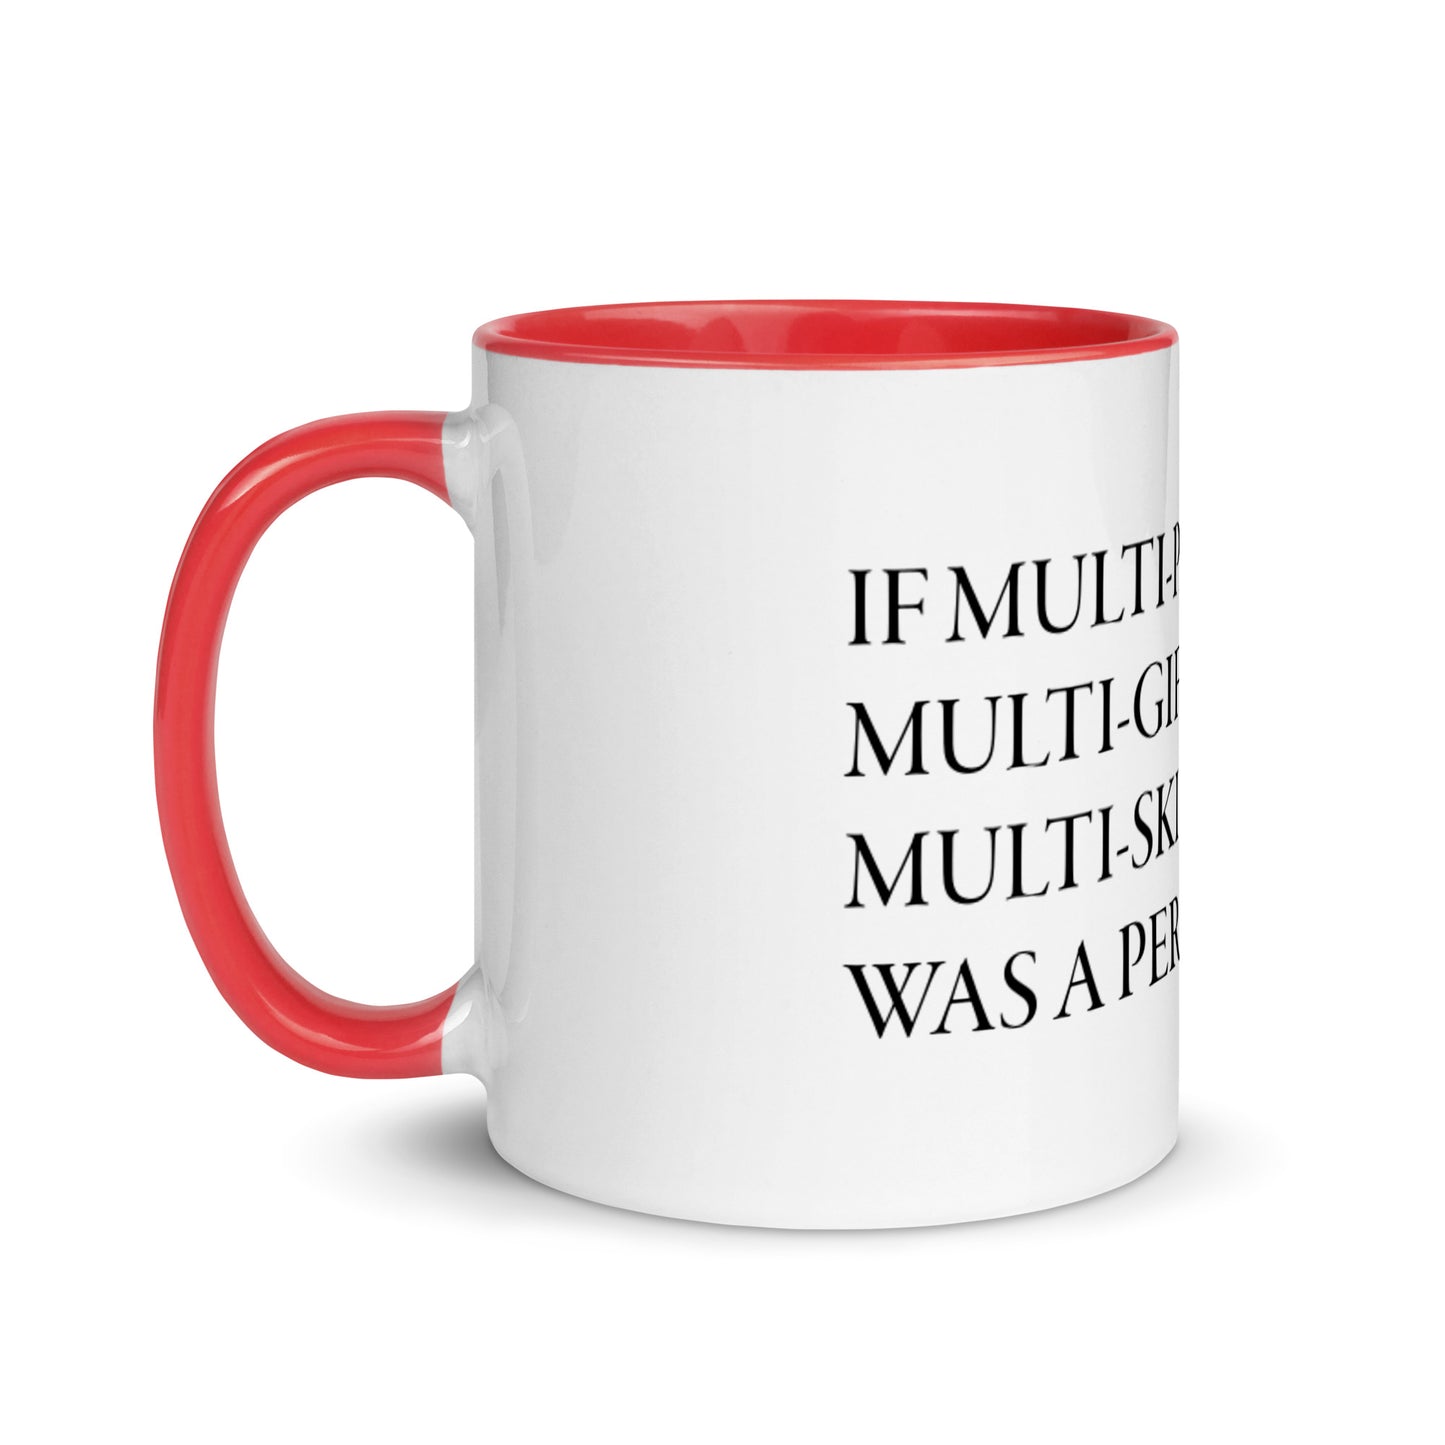 MULTI Mug with Color Inside